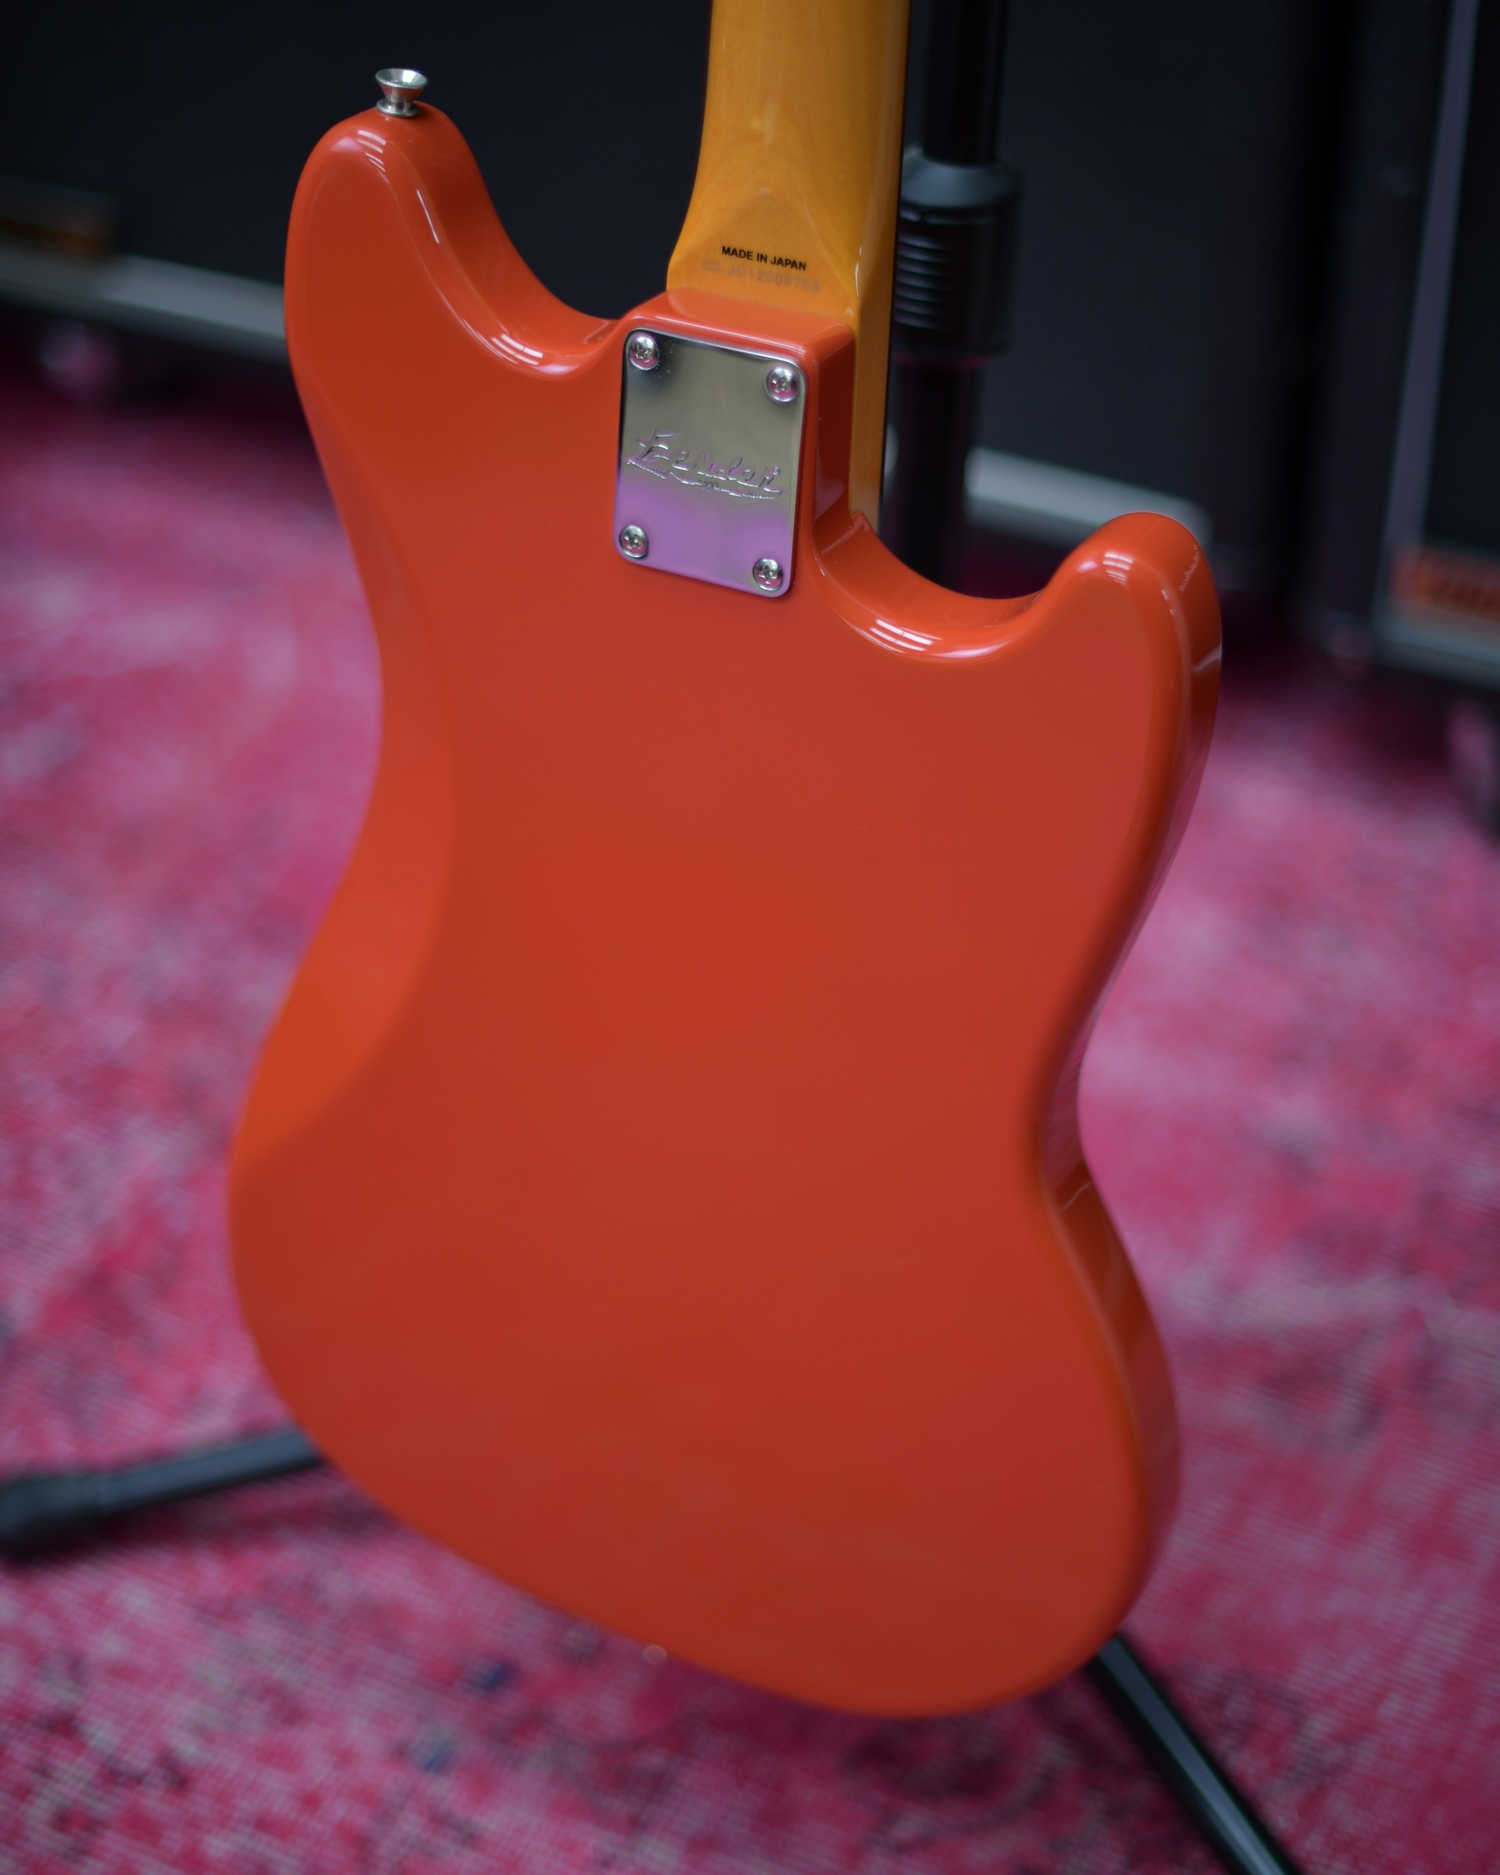 Fender Japan Kurt Cobain Mustang KC-MG-FRD Lefty Left-handed MIJ Fiesta Red